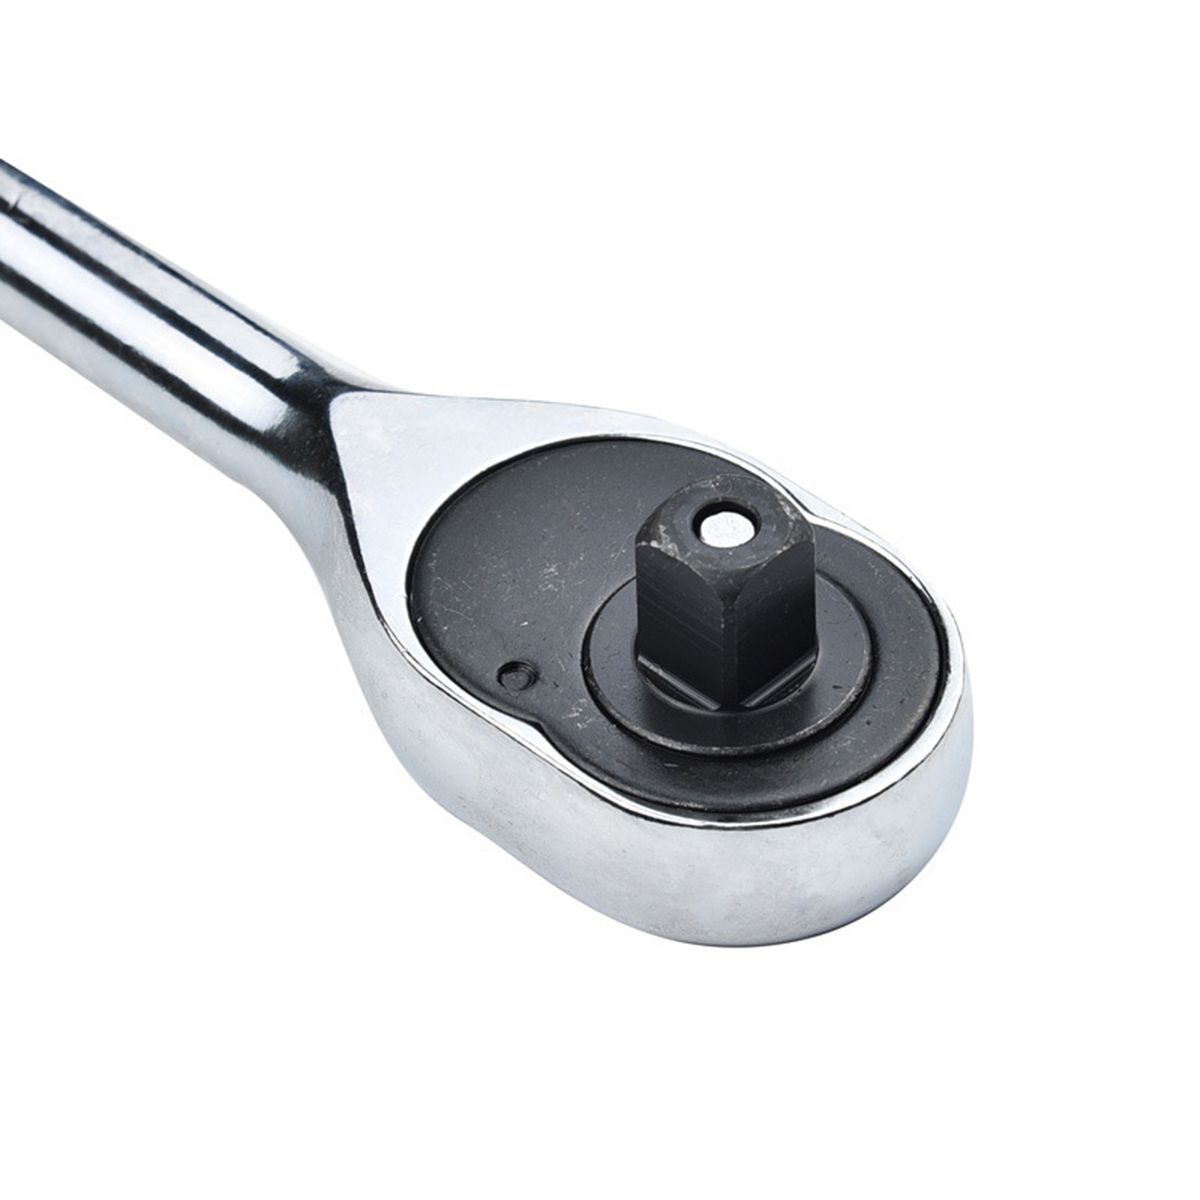 38-Handle-Drive-Socket-Ratchet-Spanner-Wrench-Quick-Release-24-Teeth-Repair-Tool-1387512